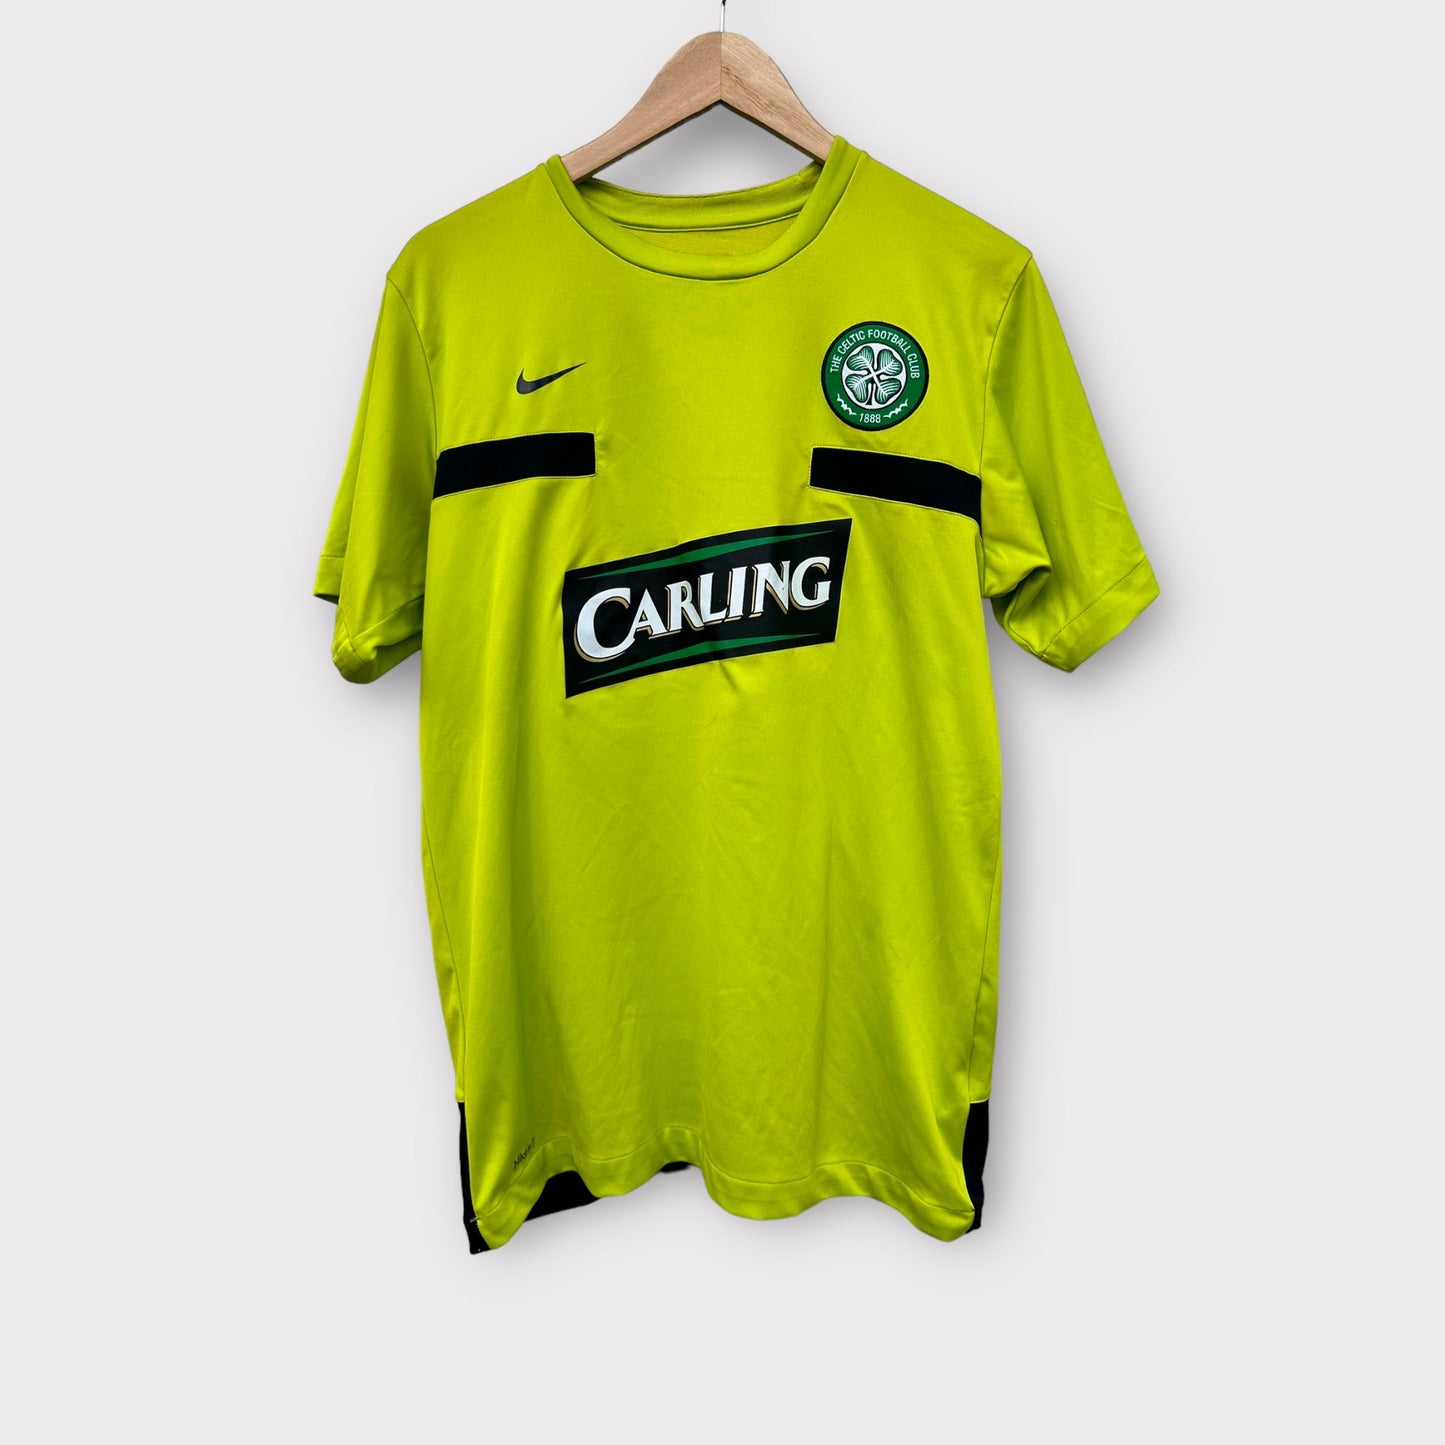 Celtic 2007/08 Nike Carling Top (M)